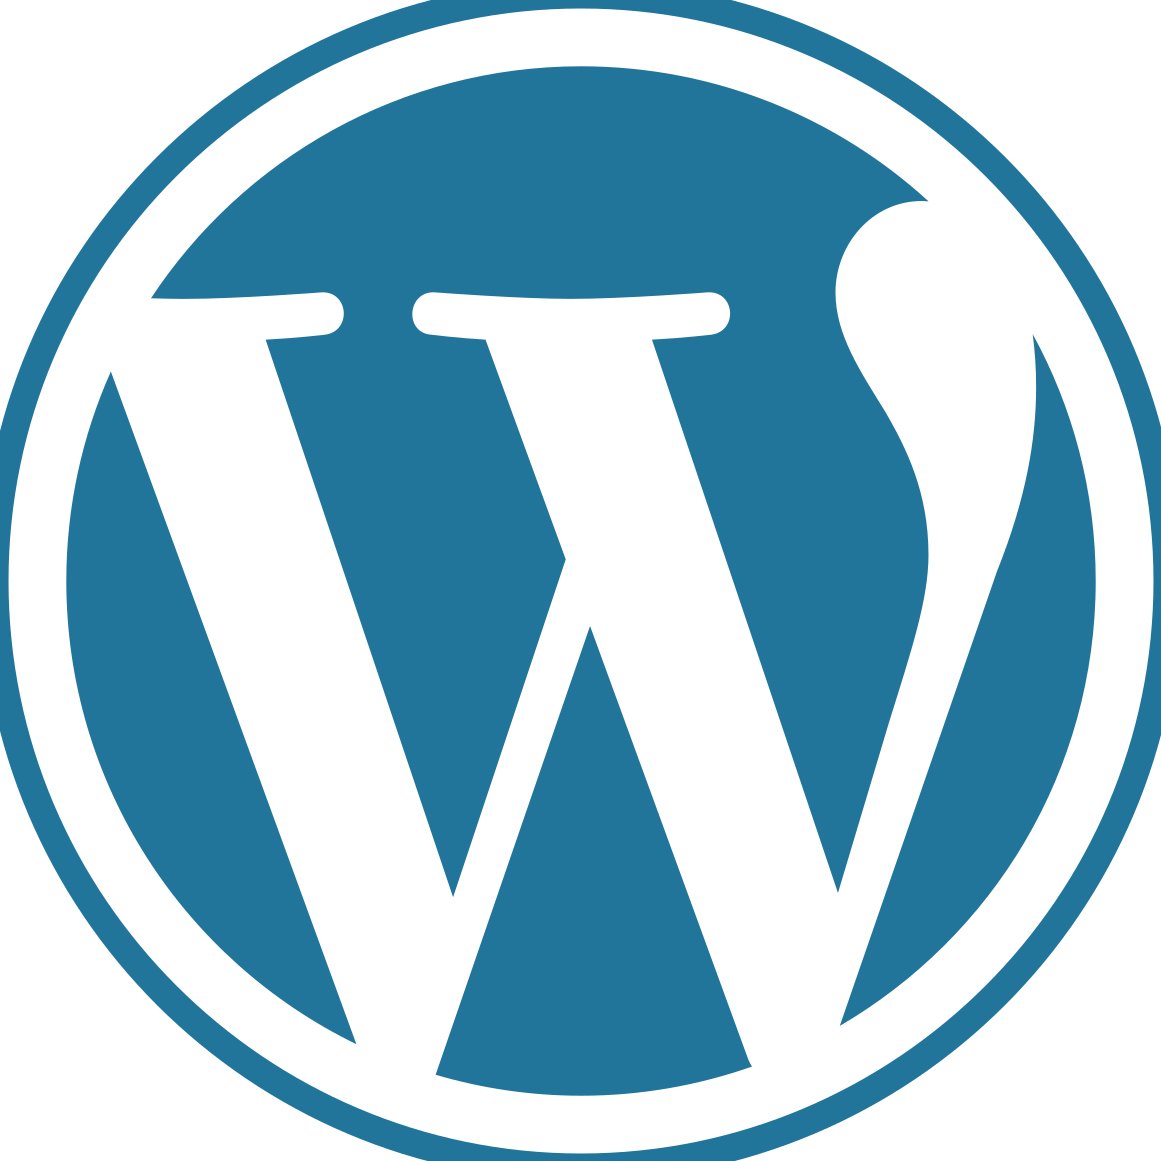 Hi, I am an expert in all aspects of WordPress website creation including custom design, theme development, theme customization, plug-ins installation etc.